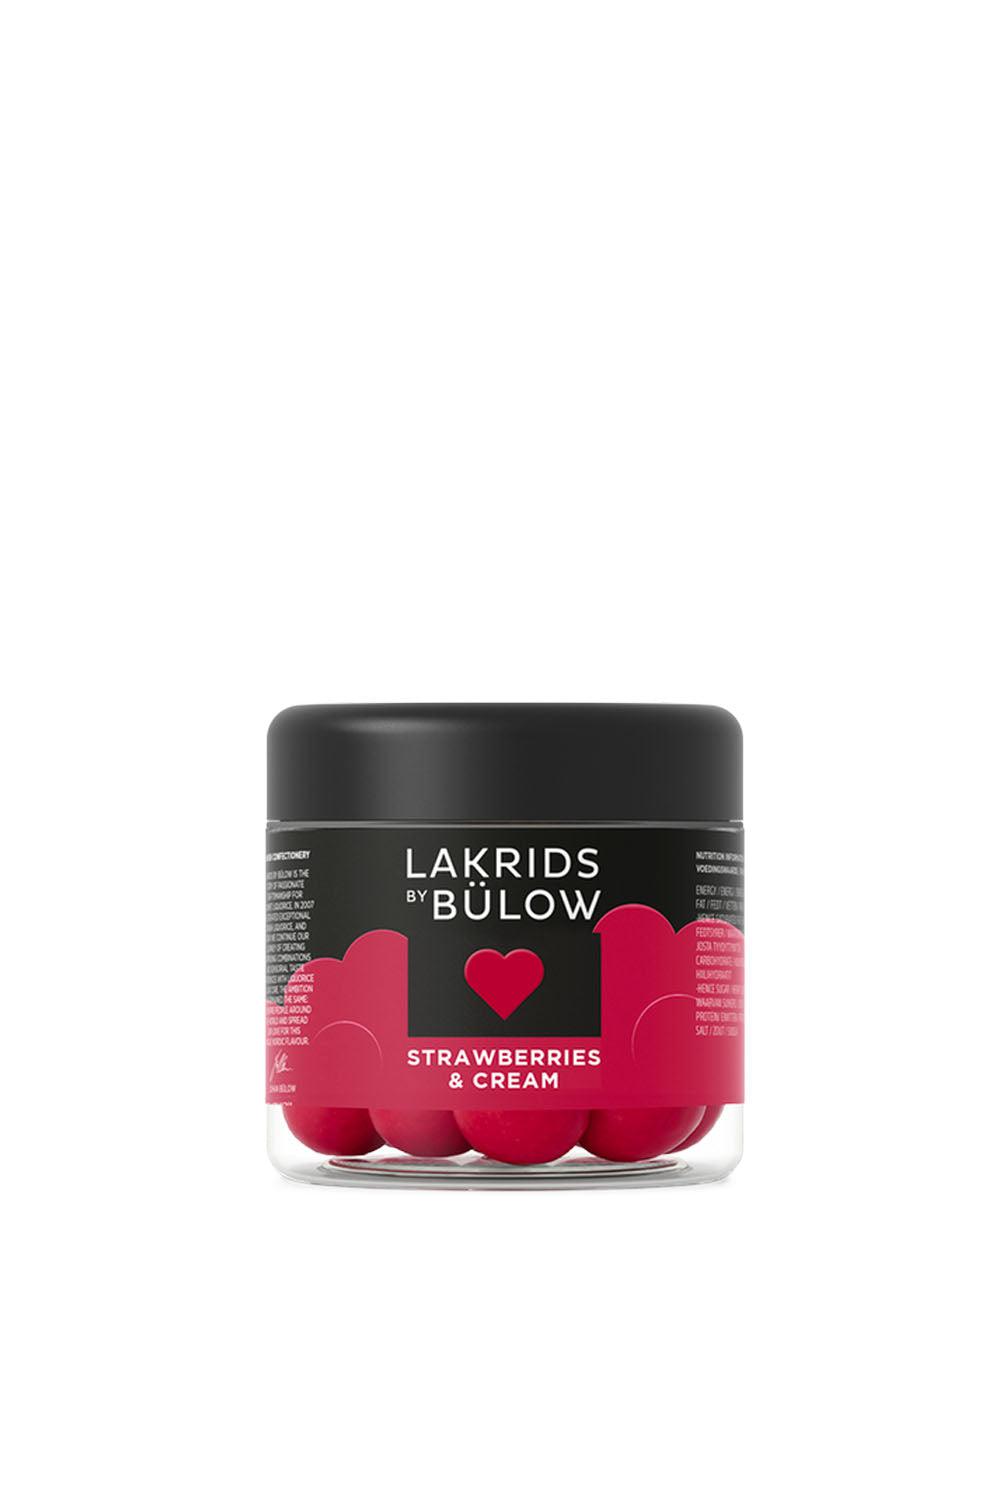 Lakrids Small Strawberries & Cream 125g